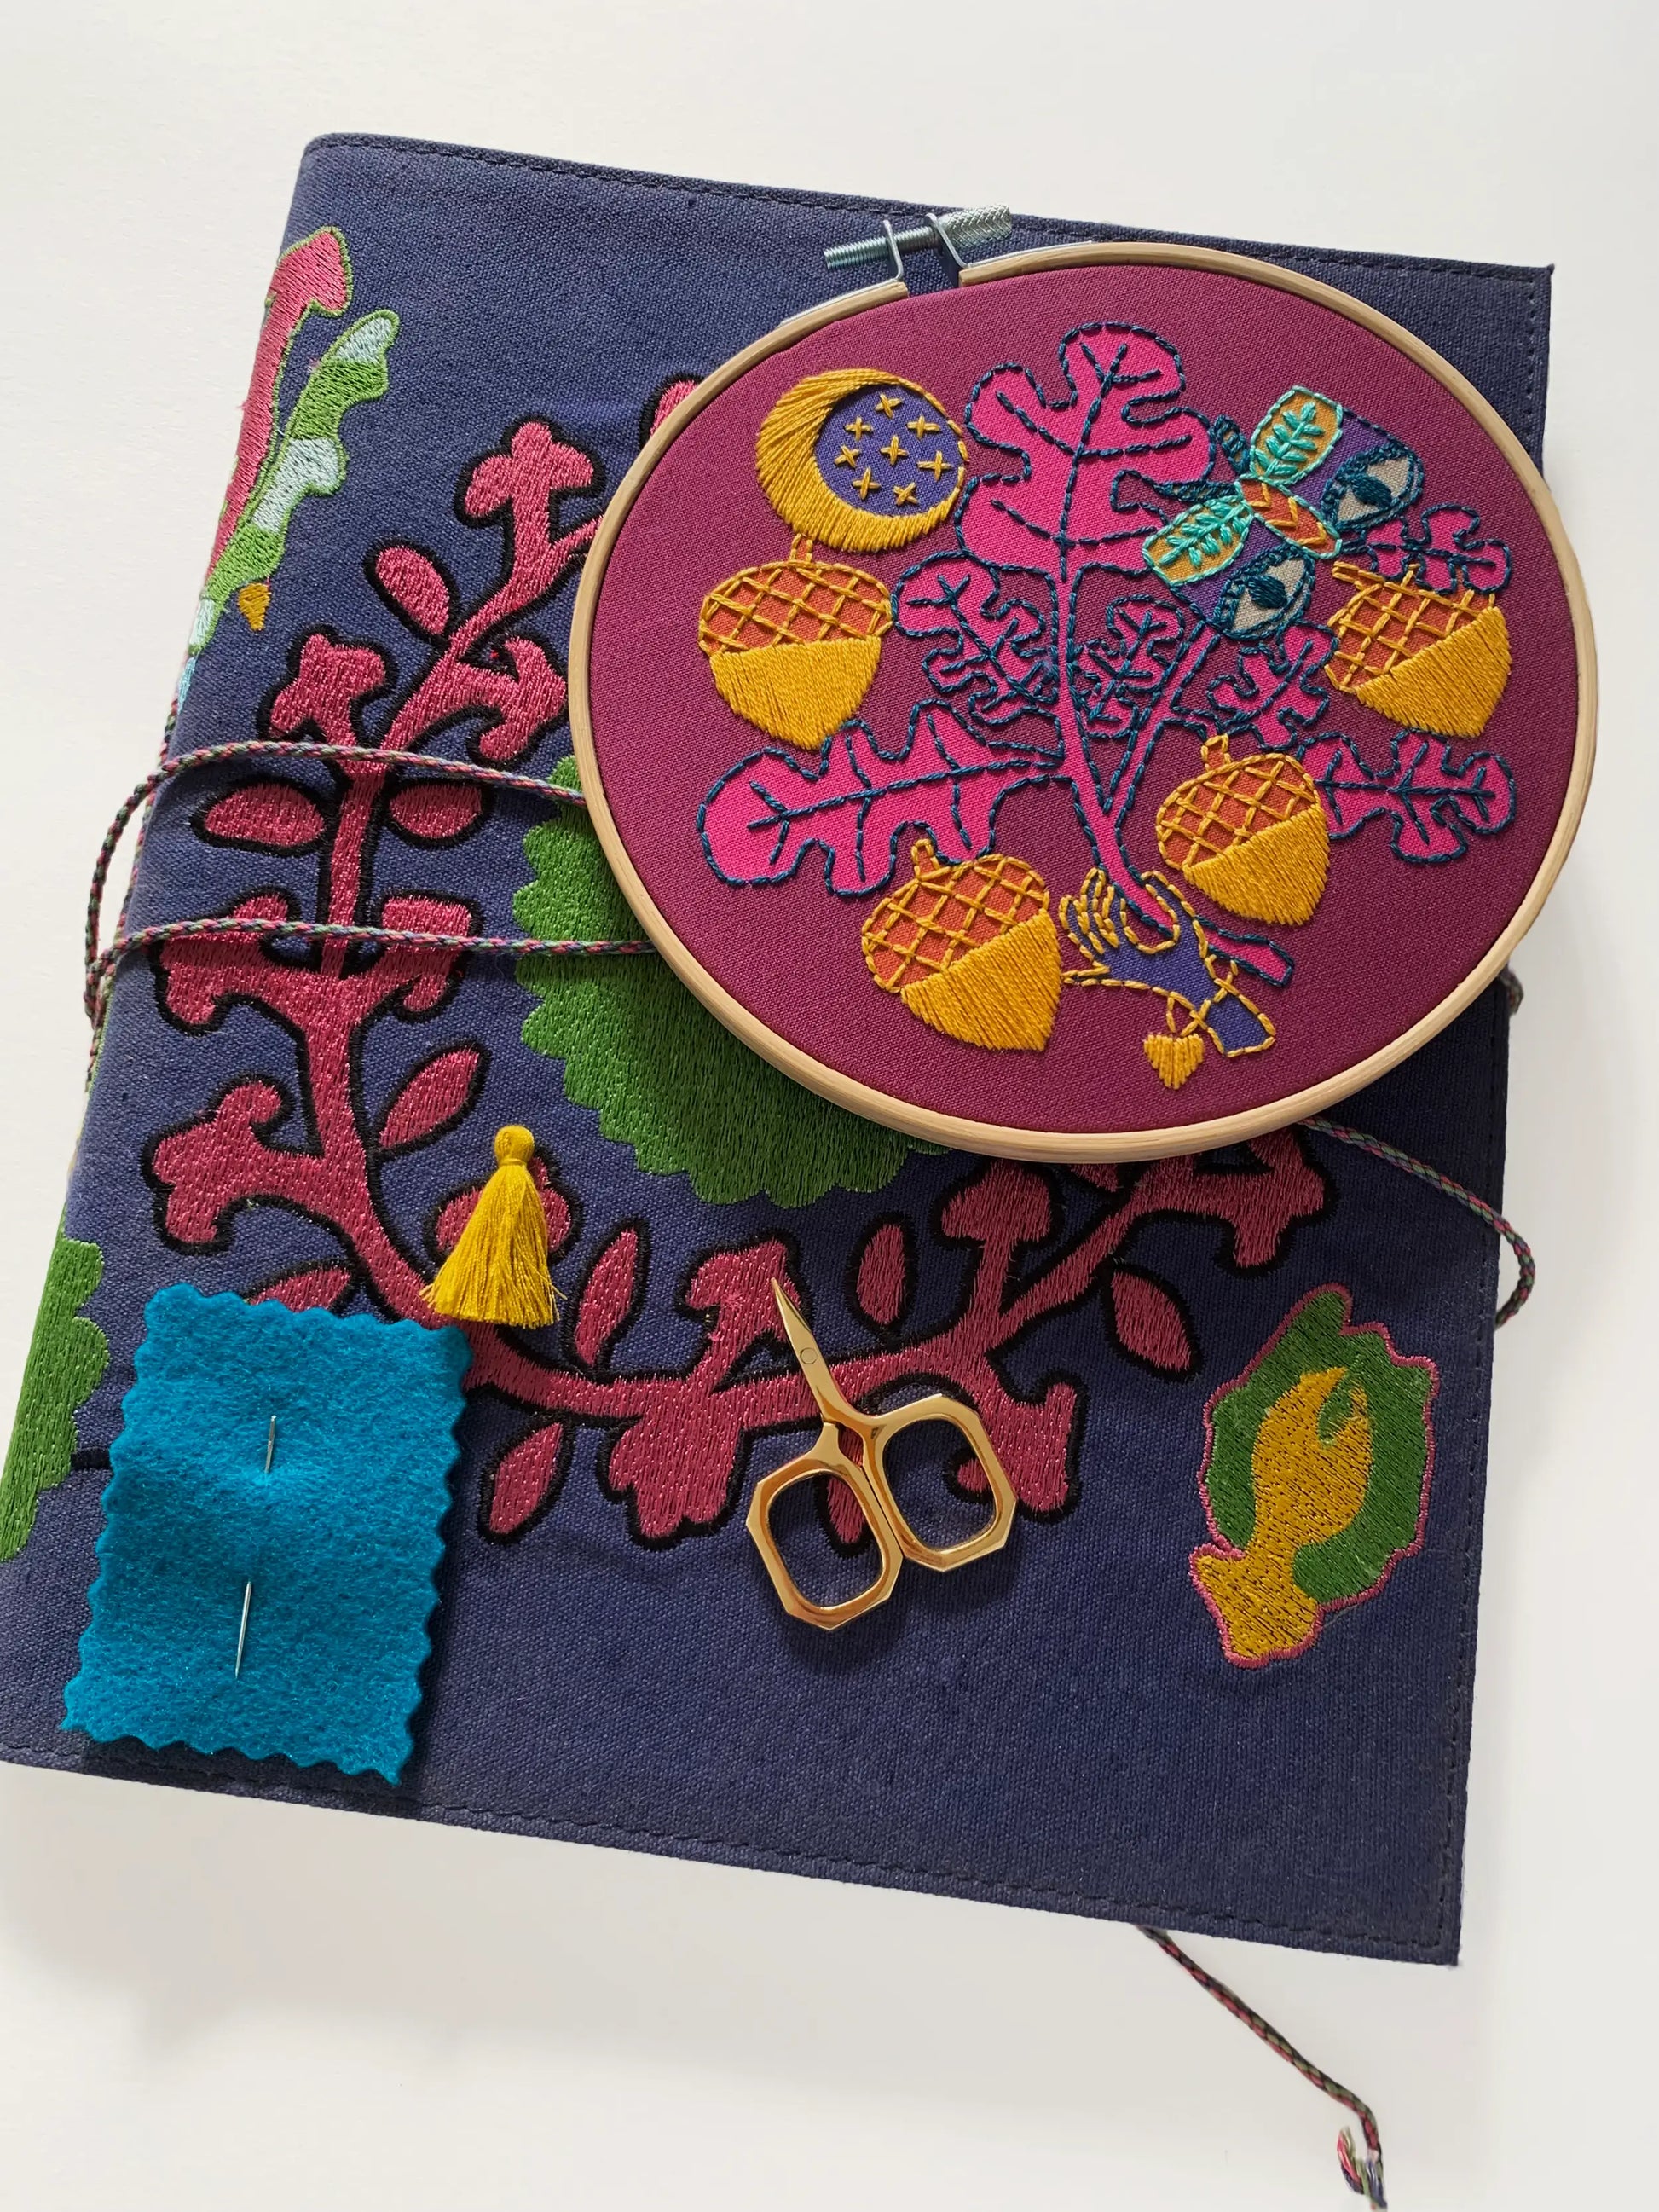 Modern Embroidery Kits